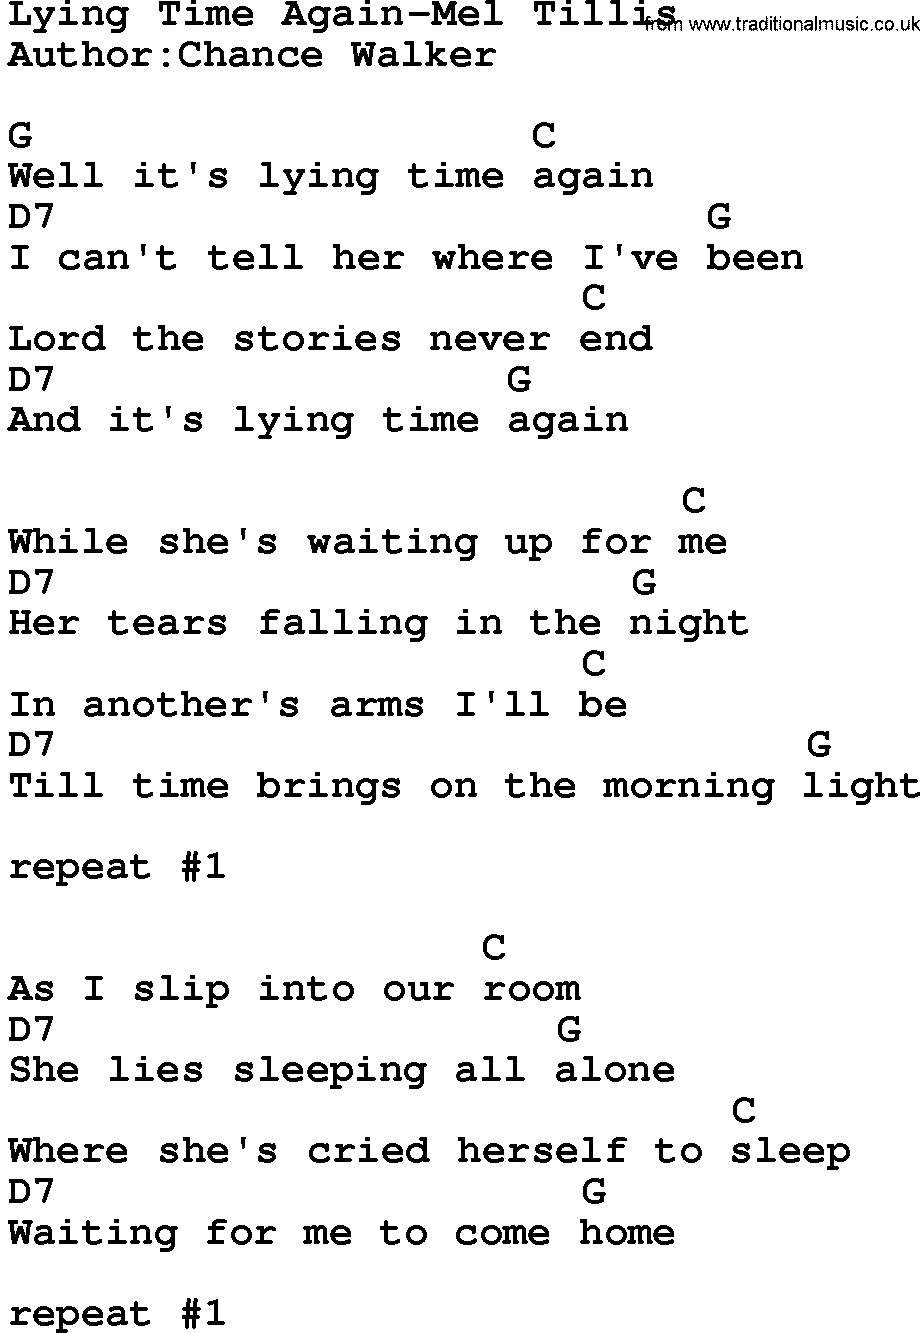 Country music song: Lying Time Again-Mel Tillis lyrics and chords